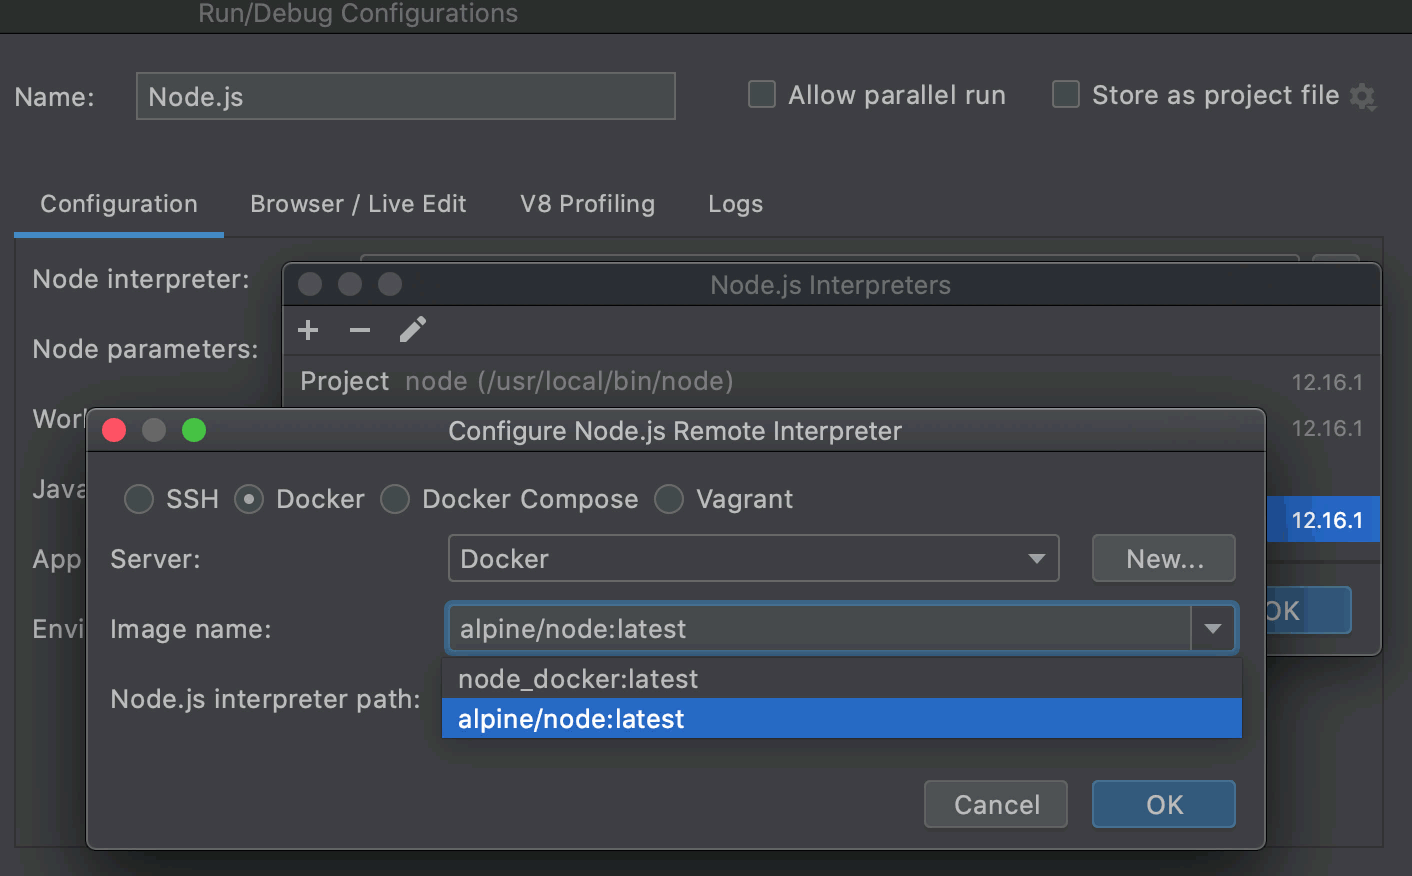 Configuring a remote Node.js interpreter on Docker